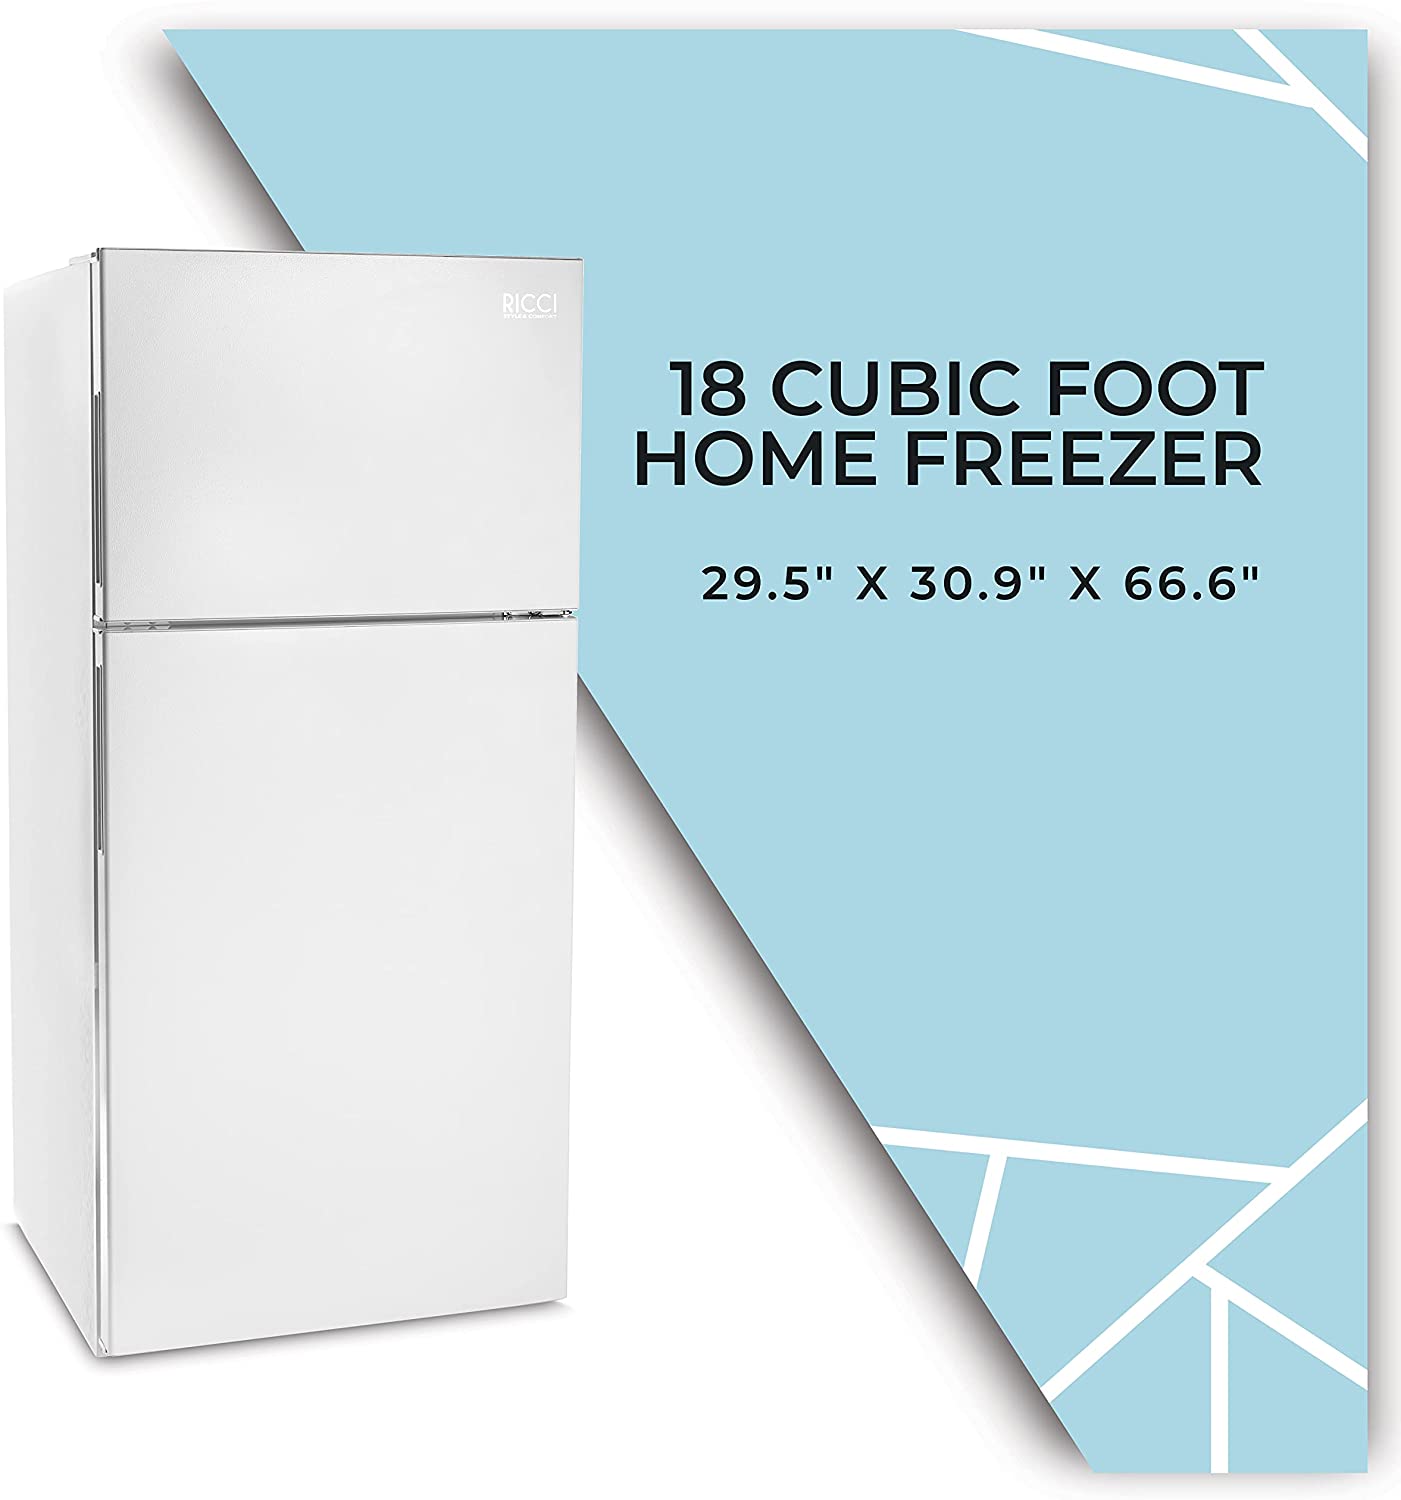 RICCI Apartment Size Refrigerator Specs